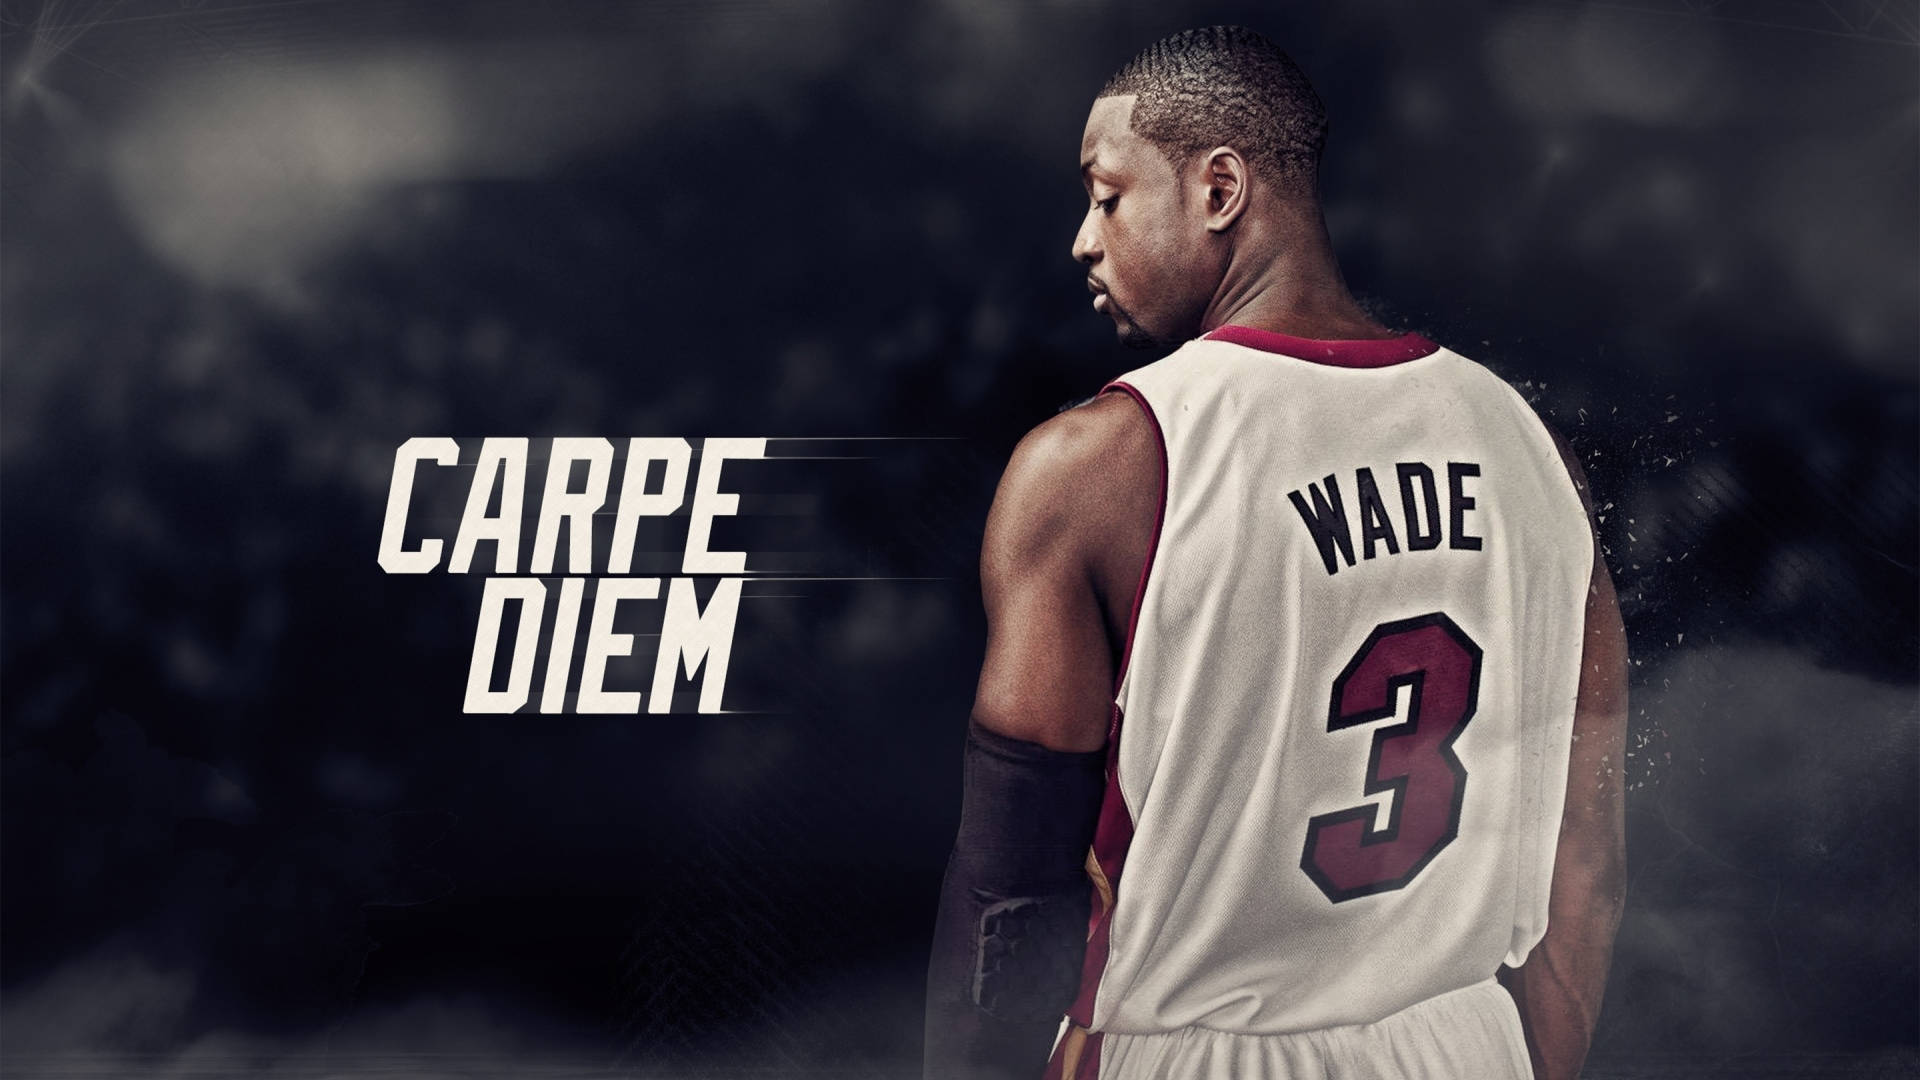 Miami Heat Player Dwayne Wade Wallpaper